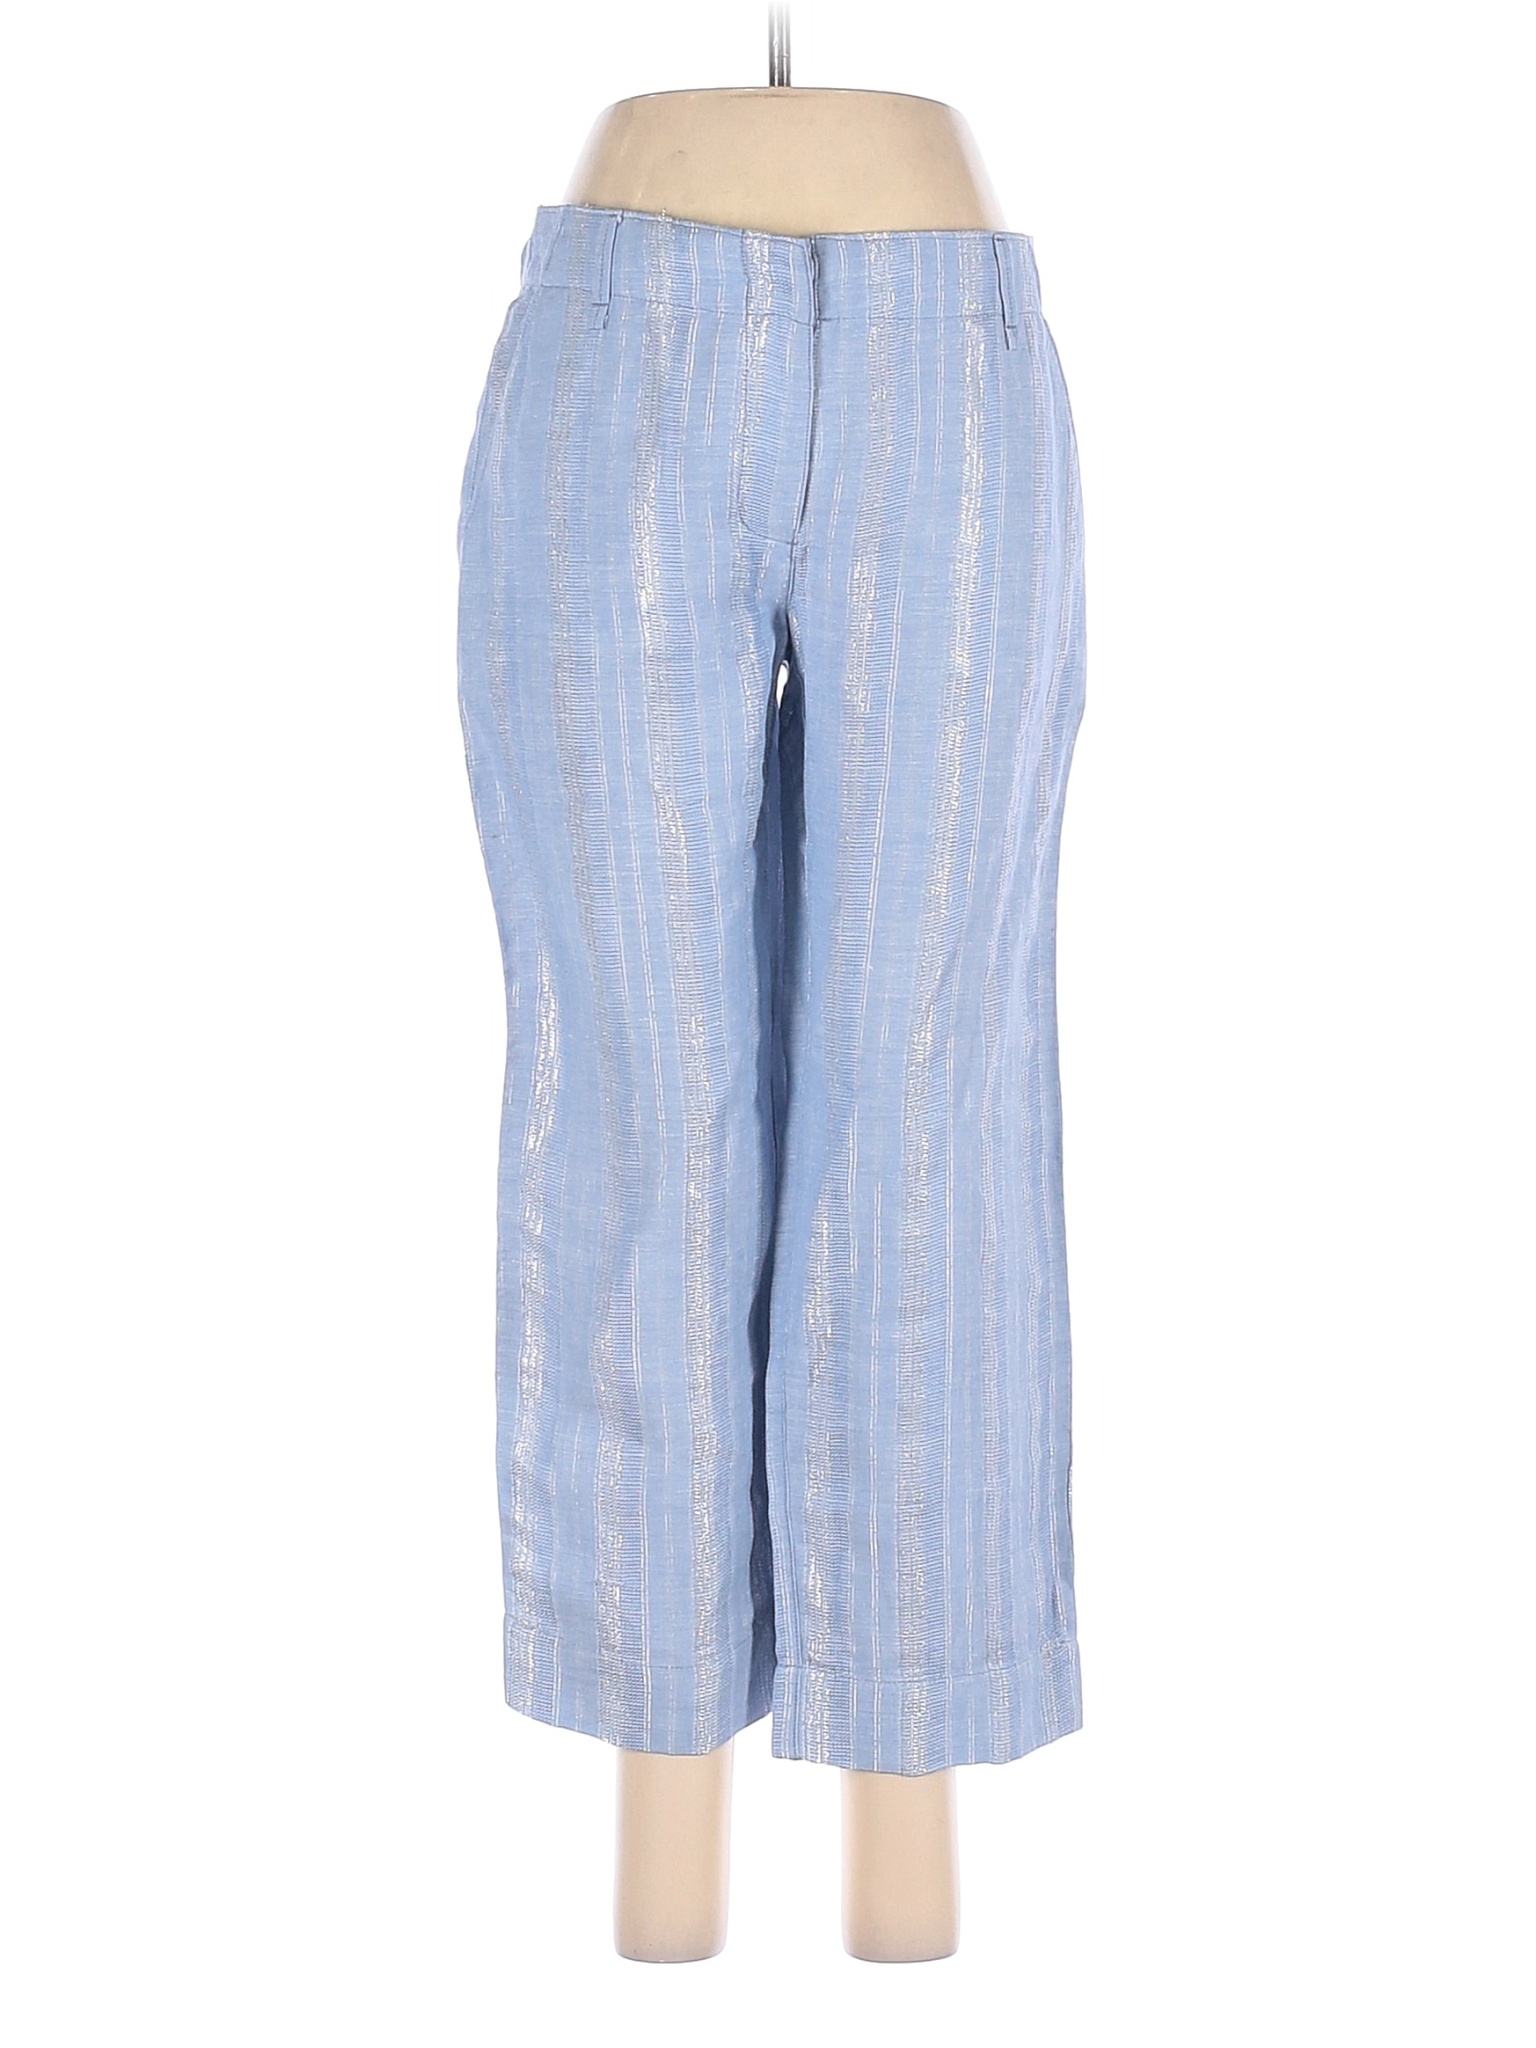 Tommy Bahama Stripes Blue Linen Pants Size 0 - 70% off | thredUP